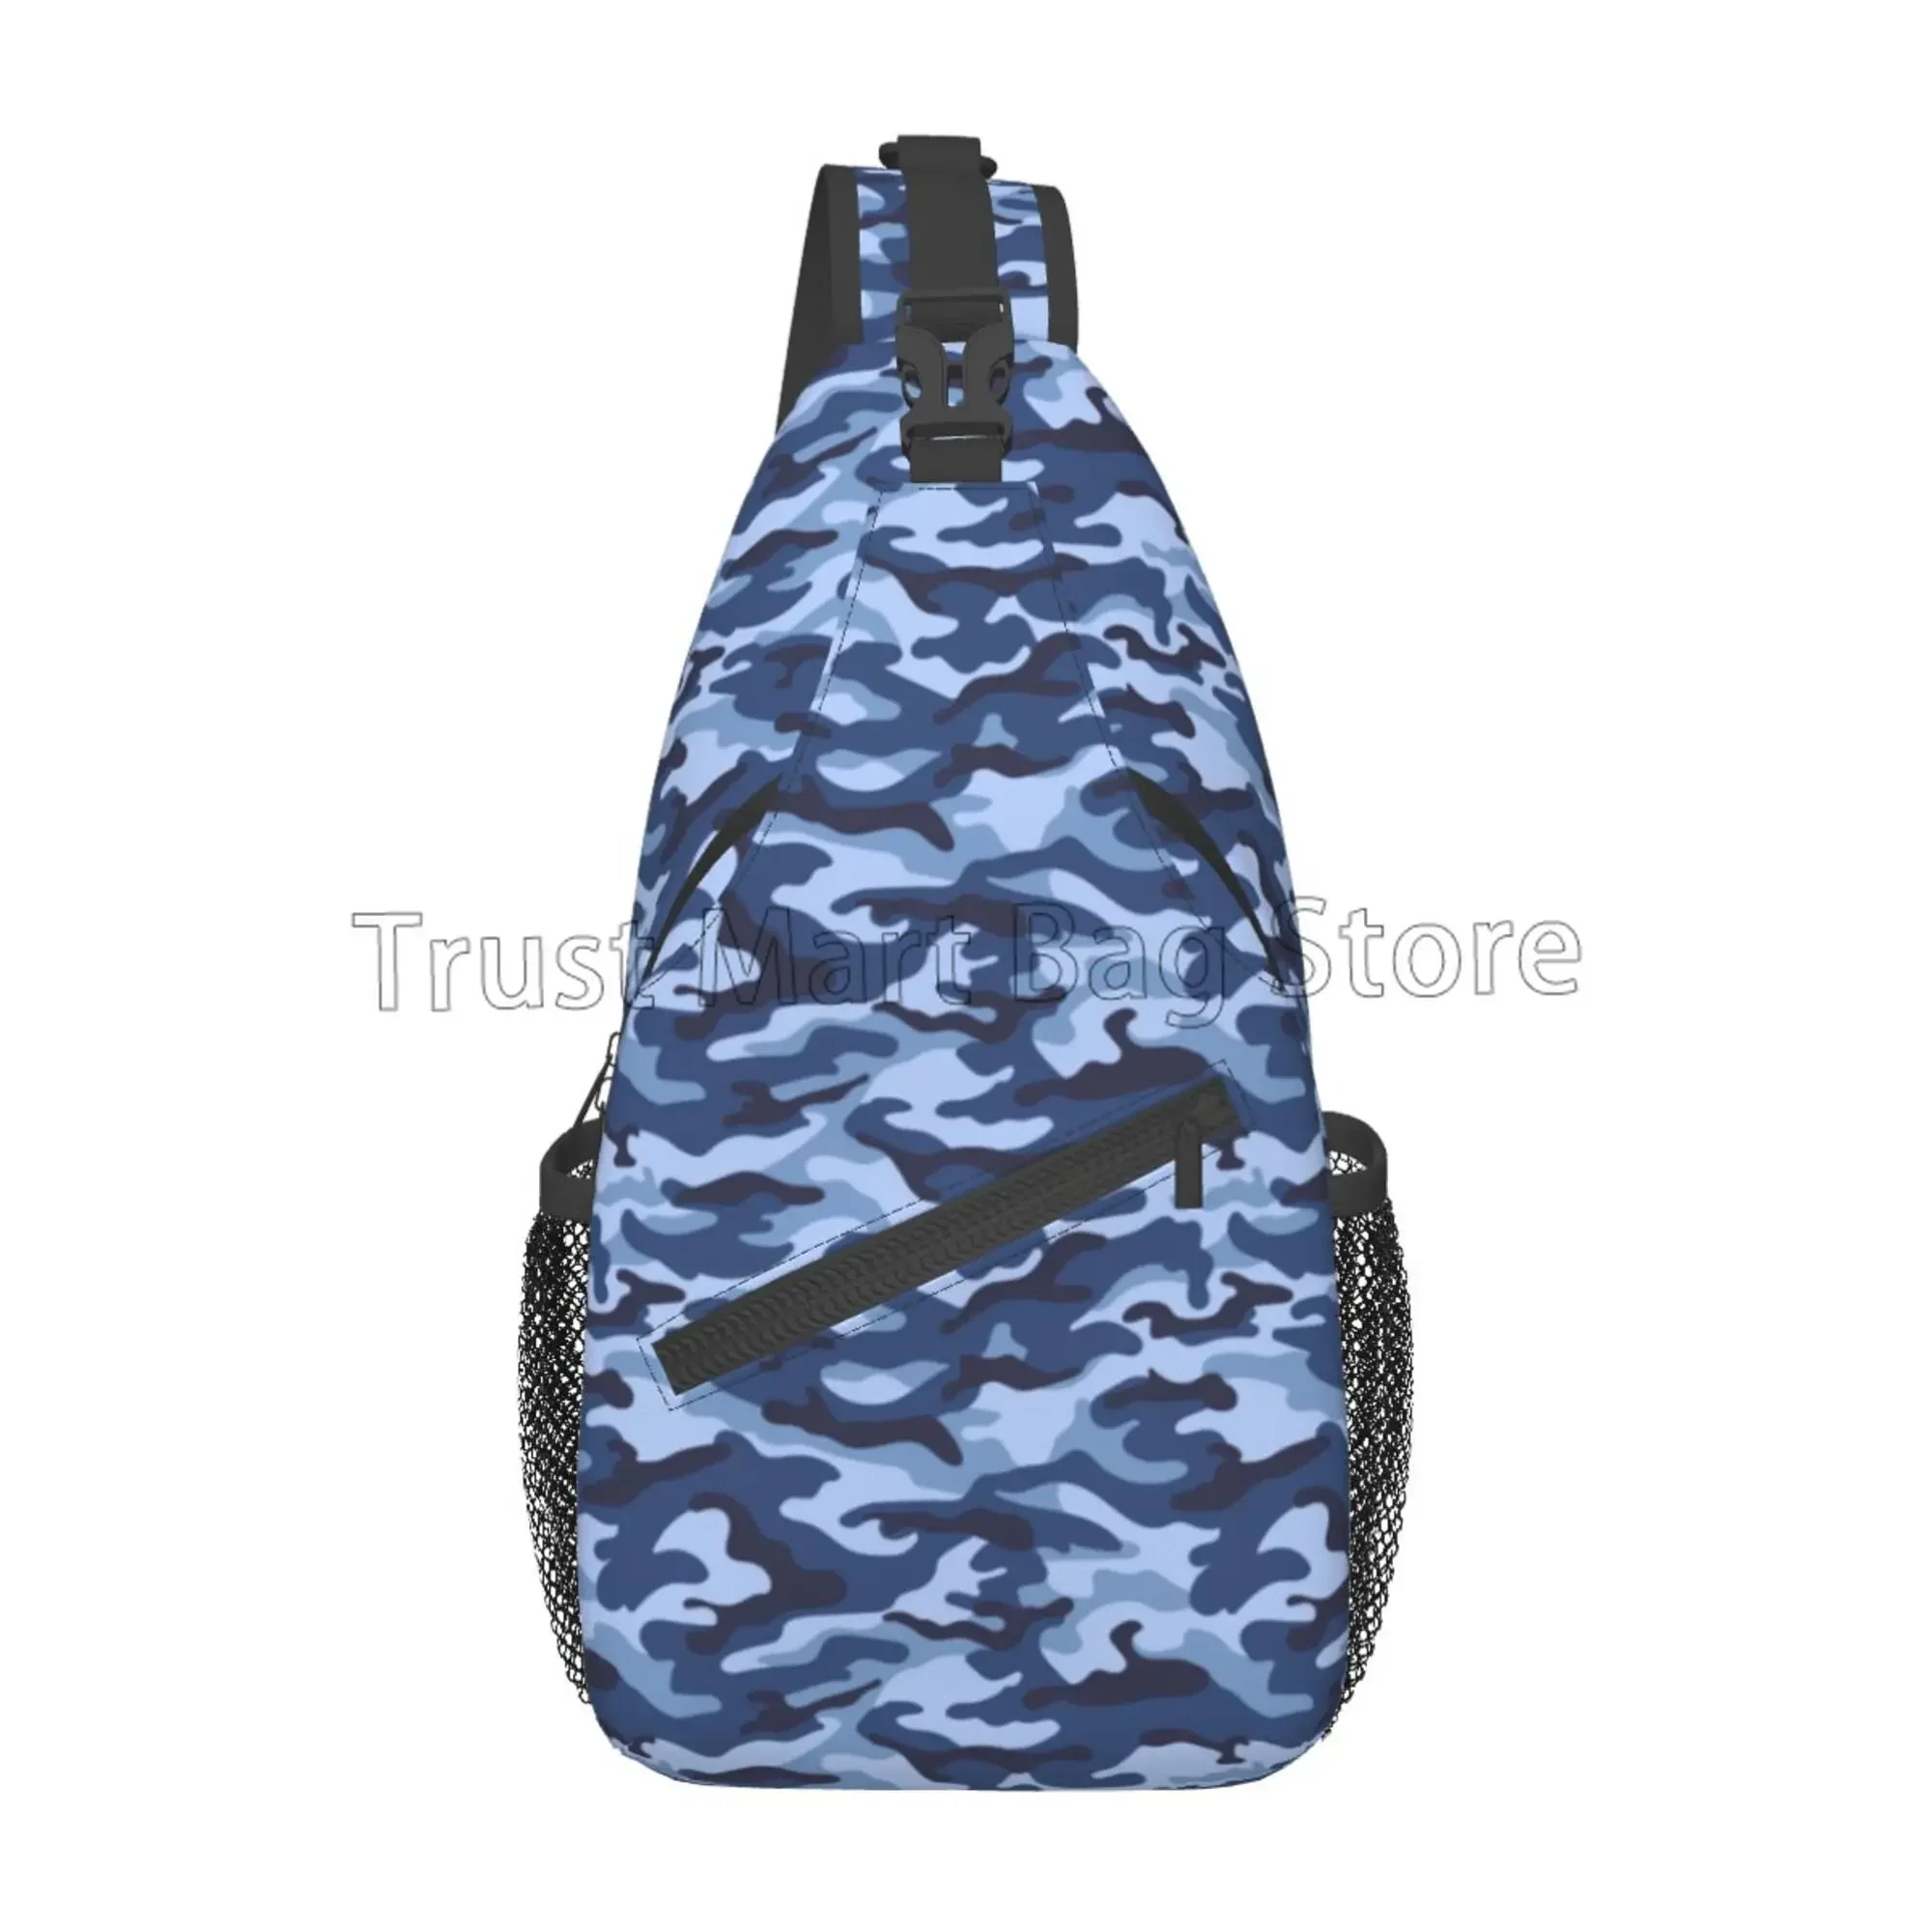 

Camo Sling Bag Navy Blue Camouflage Hiking Daypack Lightweight Crossbody Shoulder Backpack Unisex Travel Sports Chest Pack